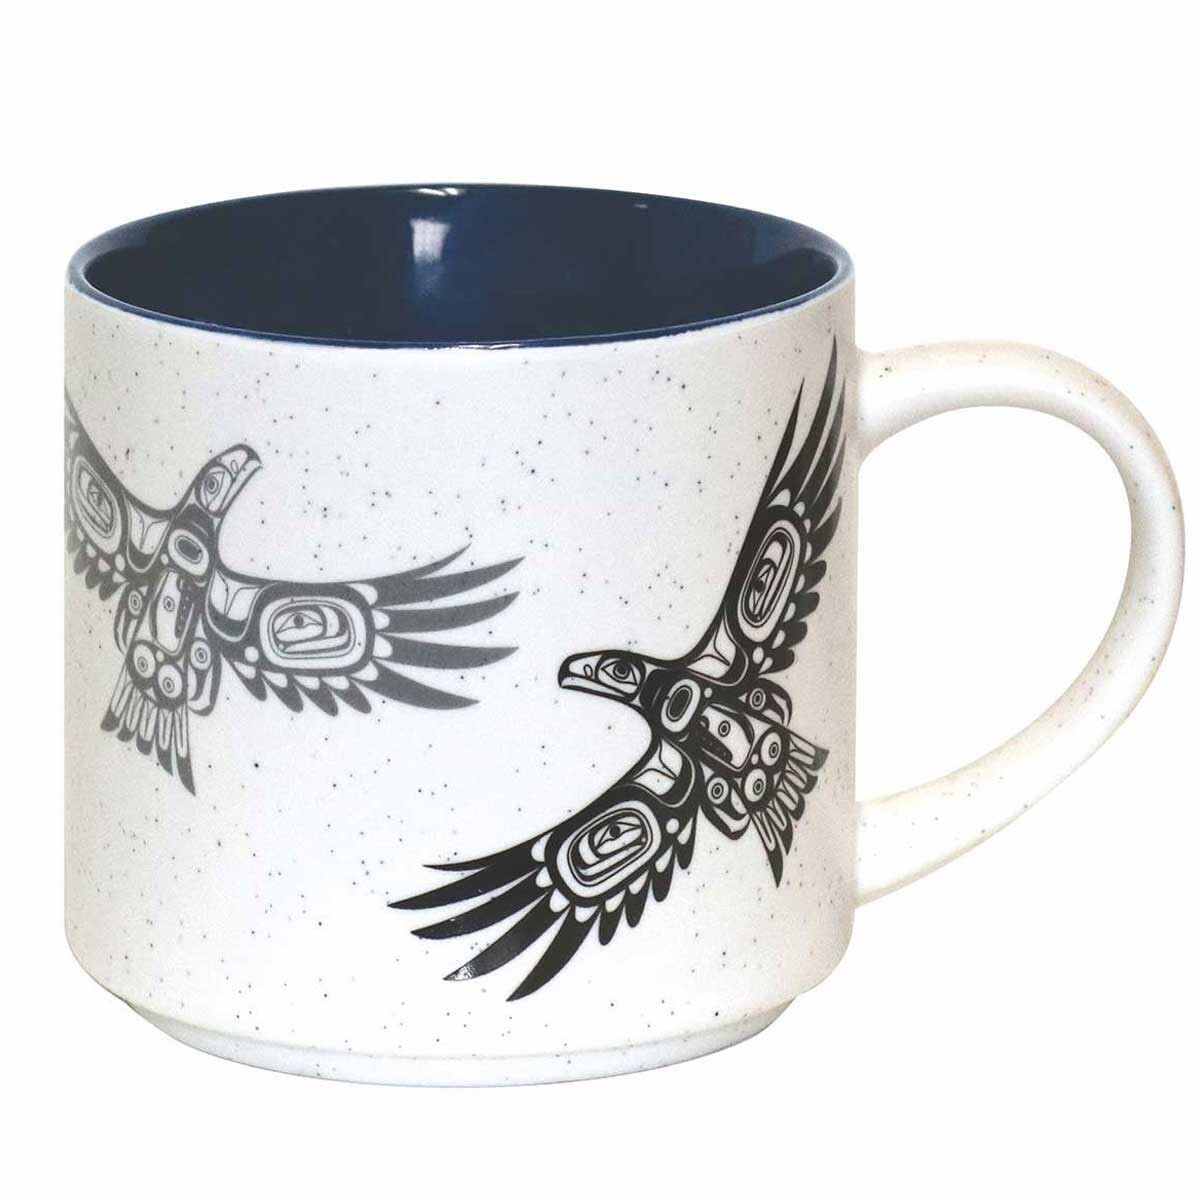 Ceramic Mug - Soaring Eagle by Corey Bulpitt